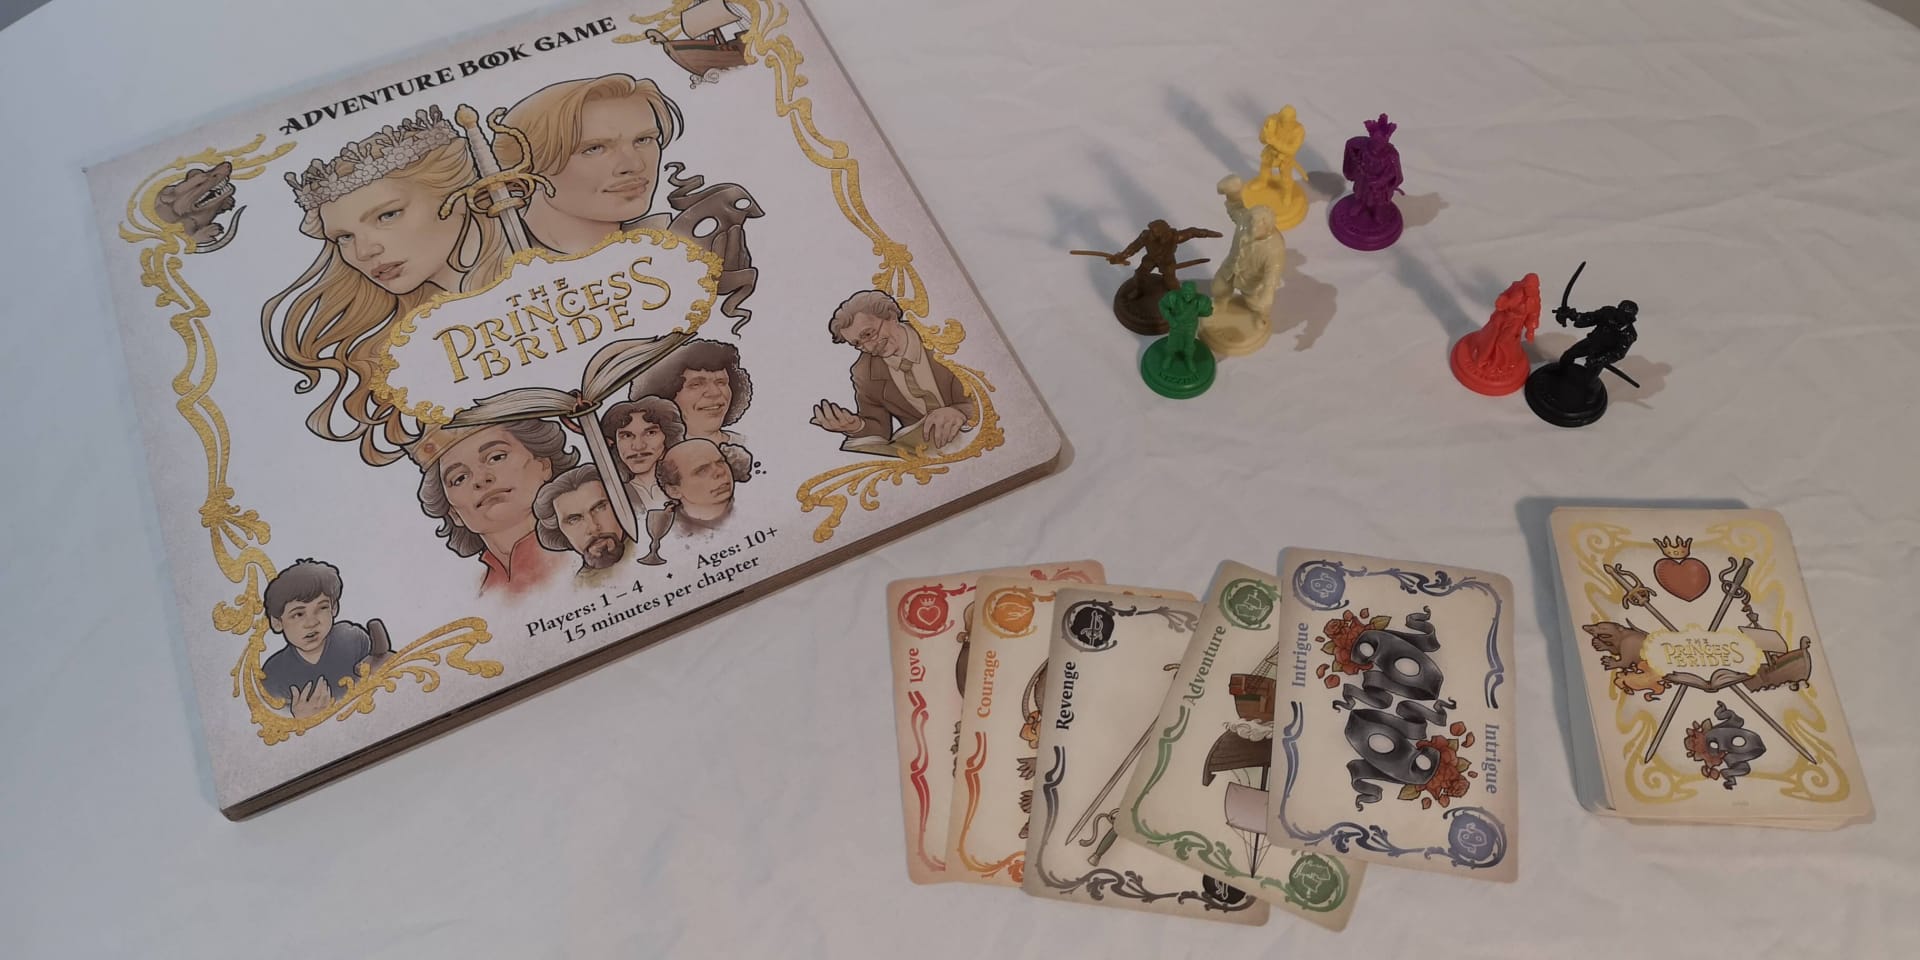 The Princess Bride Adventure Game Components.